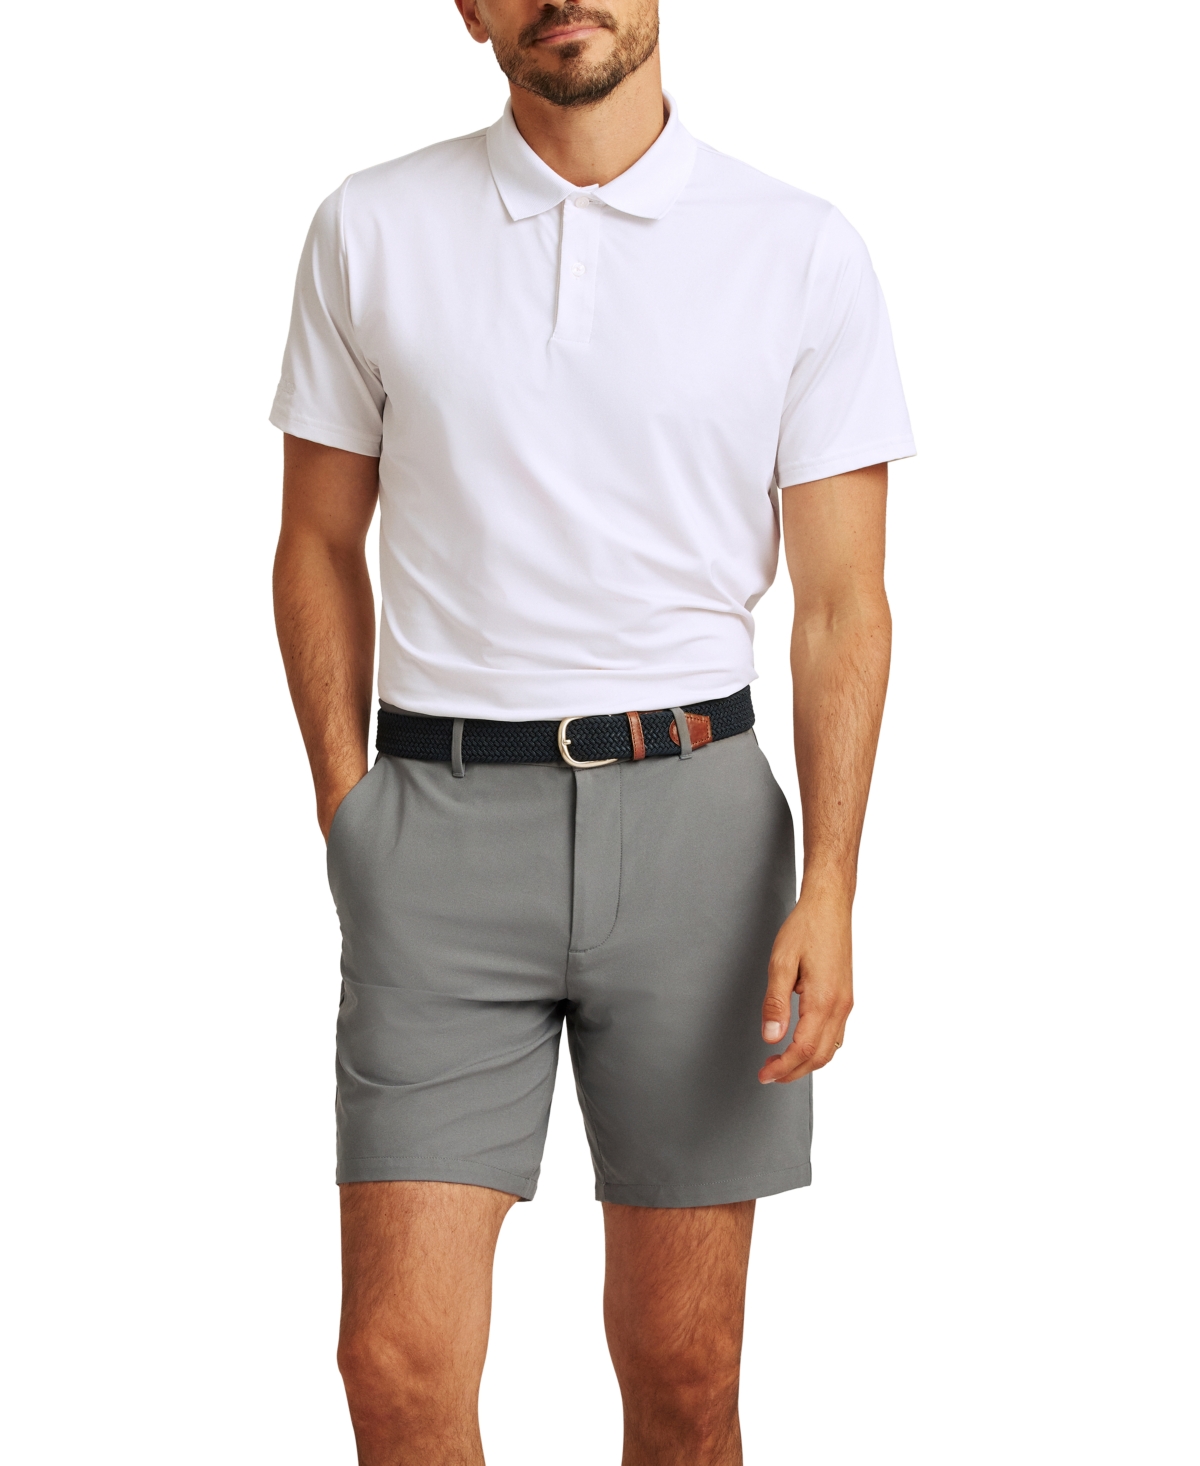 Men's All-Season Standard-Fit 7" Golf Shorts - Quiet Shad